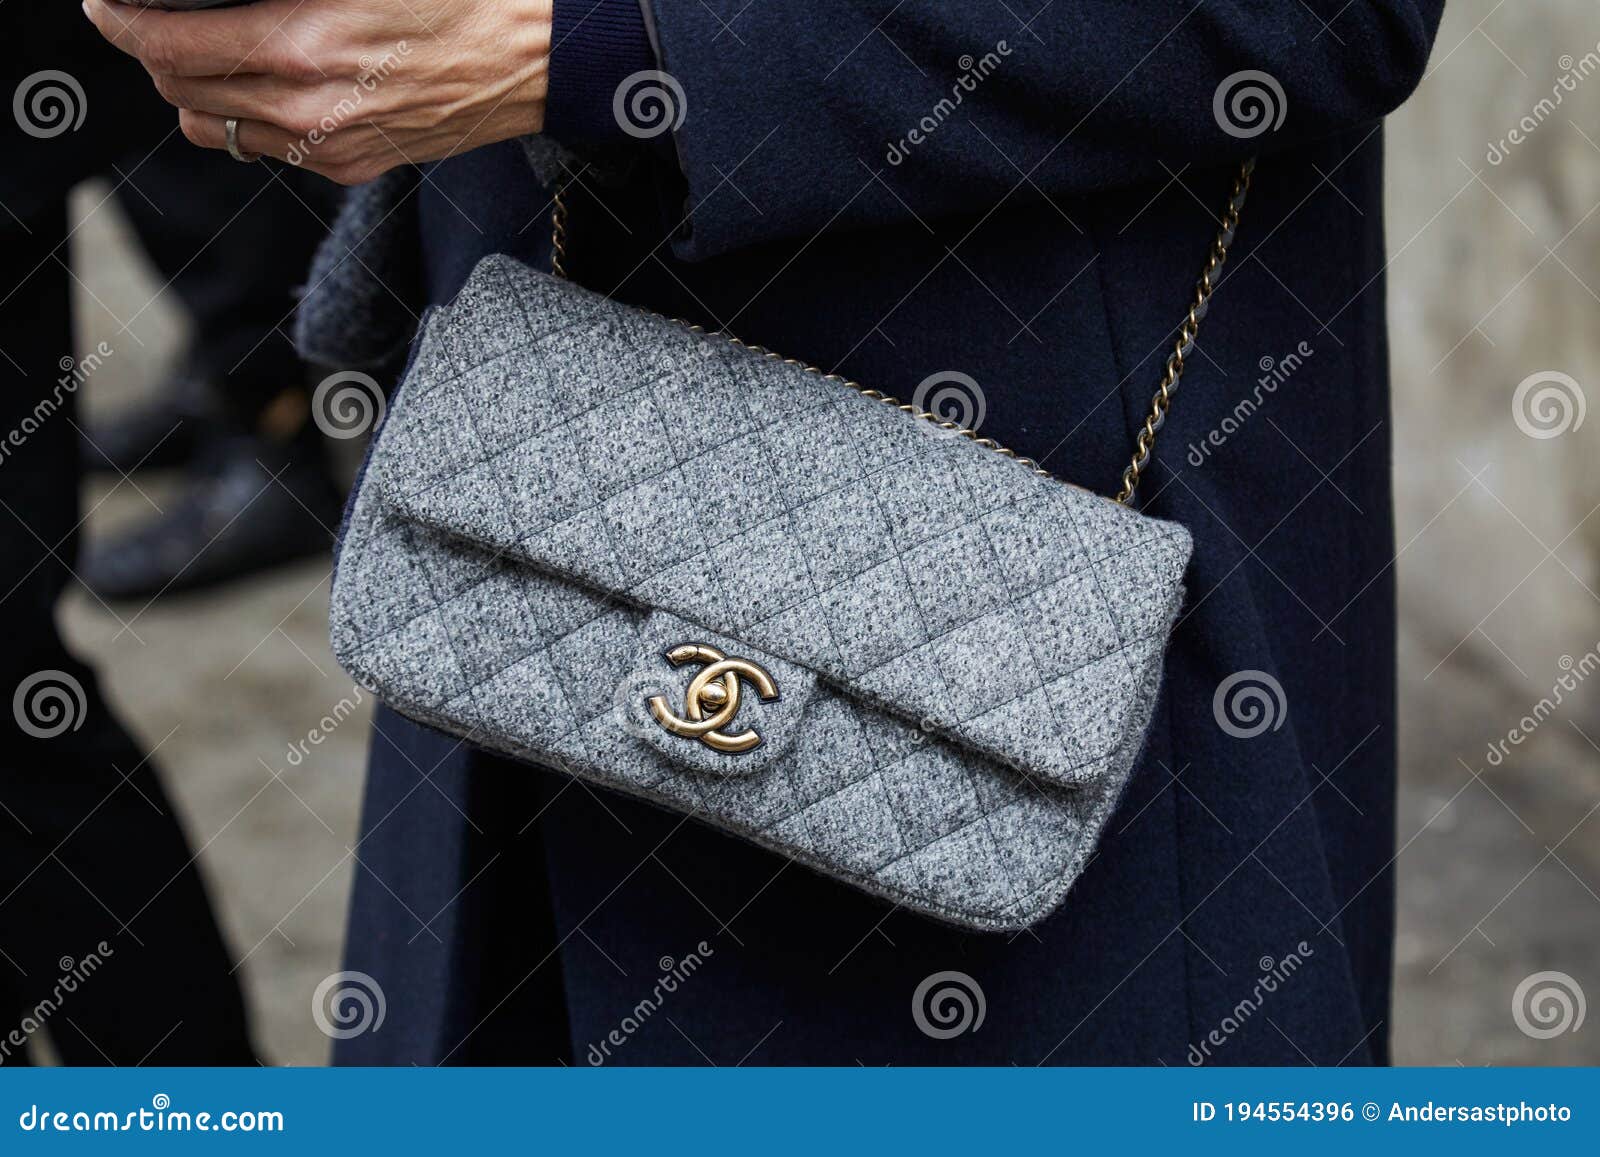 Chanel Bag Stock Vector Illustration and Royalty Free Chanel Bag